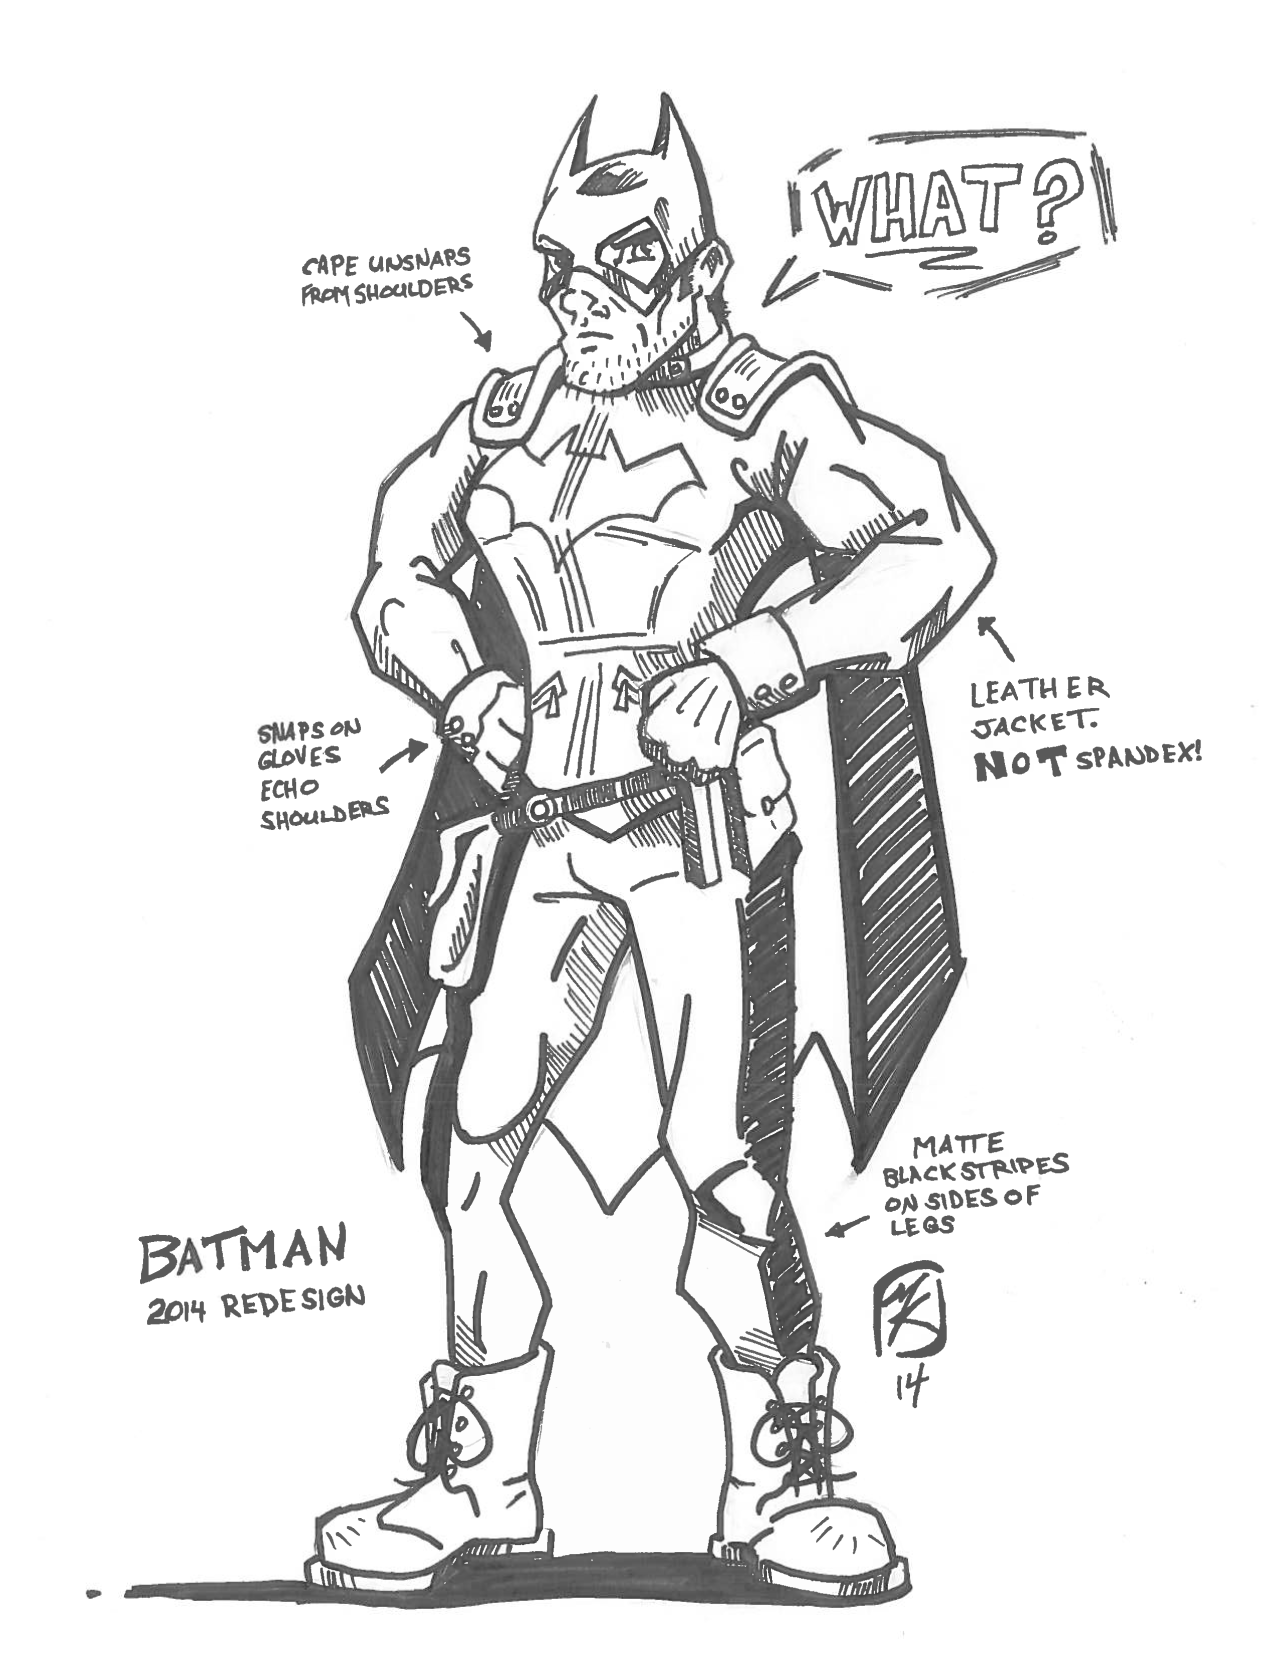 Batman Redesign 2014 - still a little rough, but I think it’s gonna work ;P